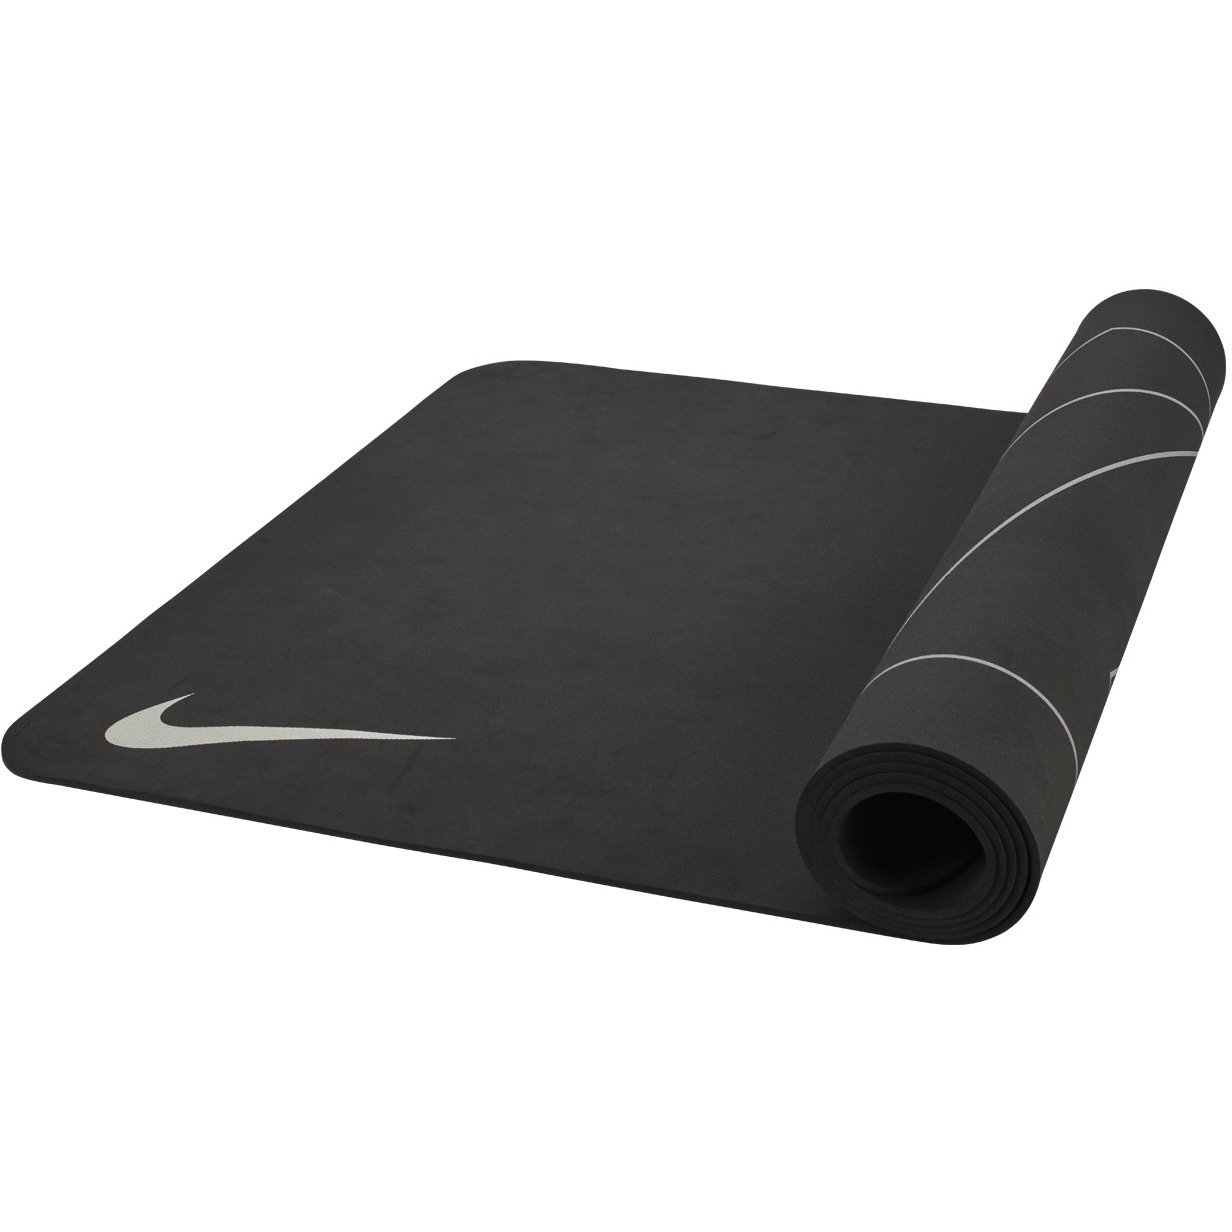 Picture of Nike Yoga Mat 4 mm Reversible - anthracite/medium grey 012